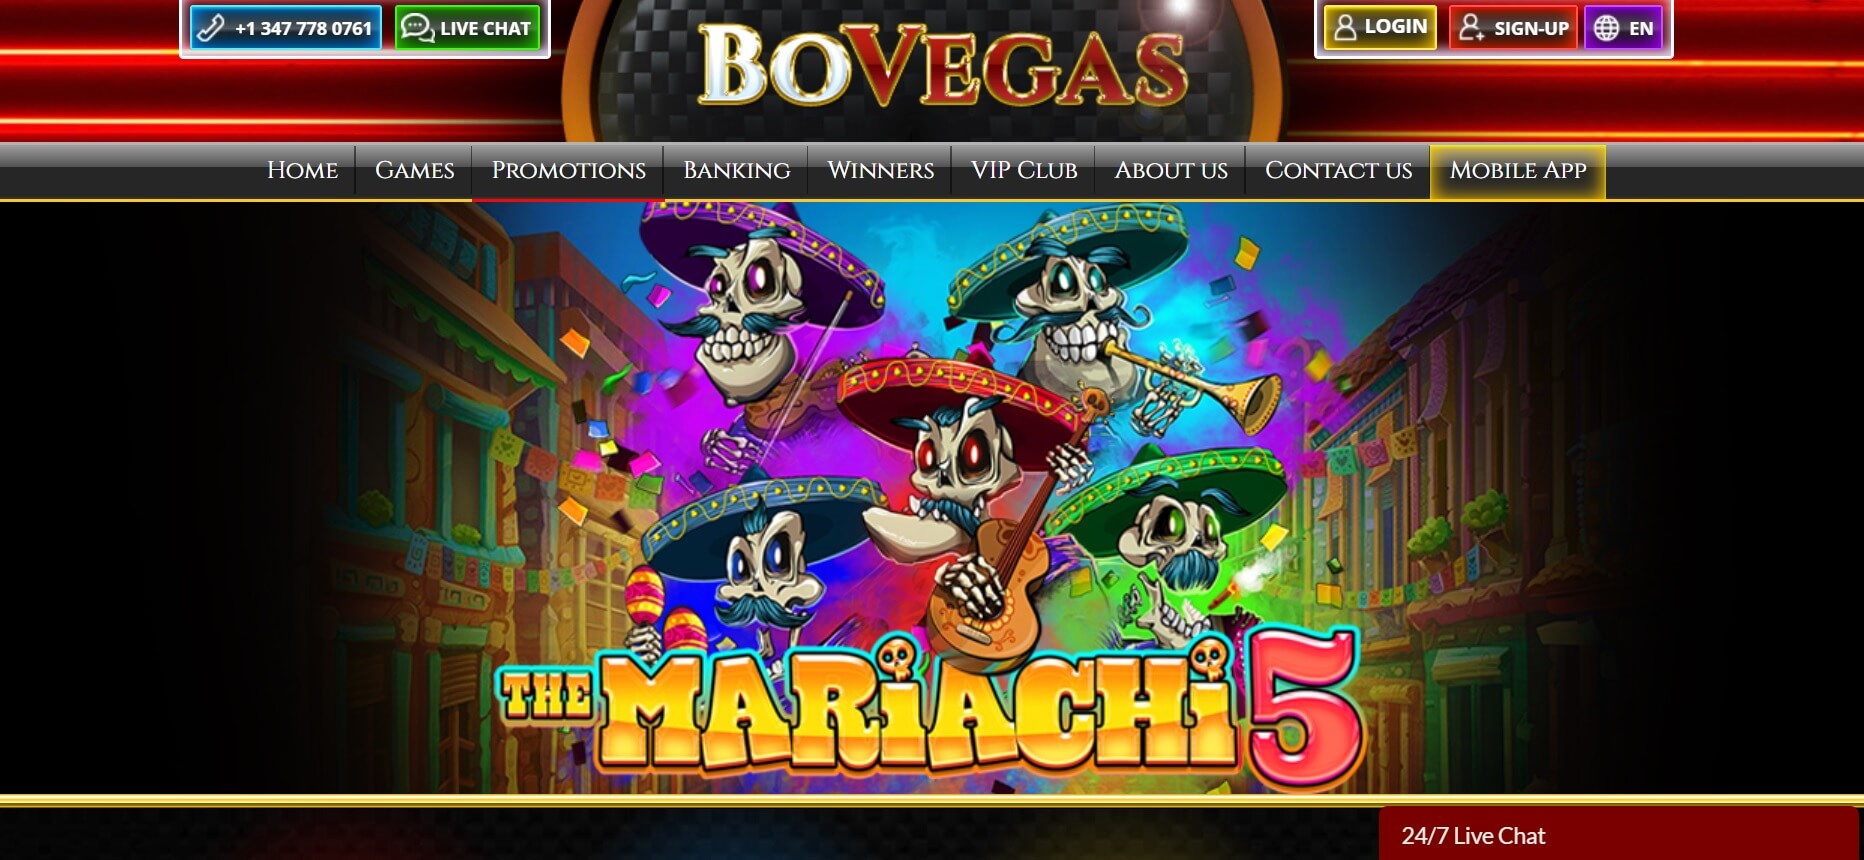 bovegas casino games slots new